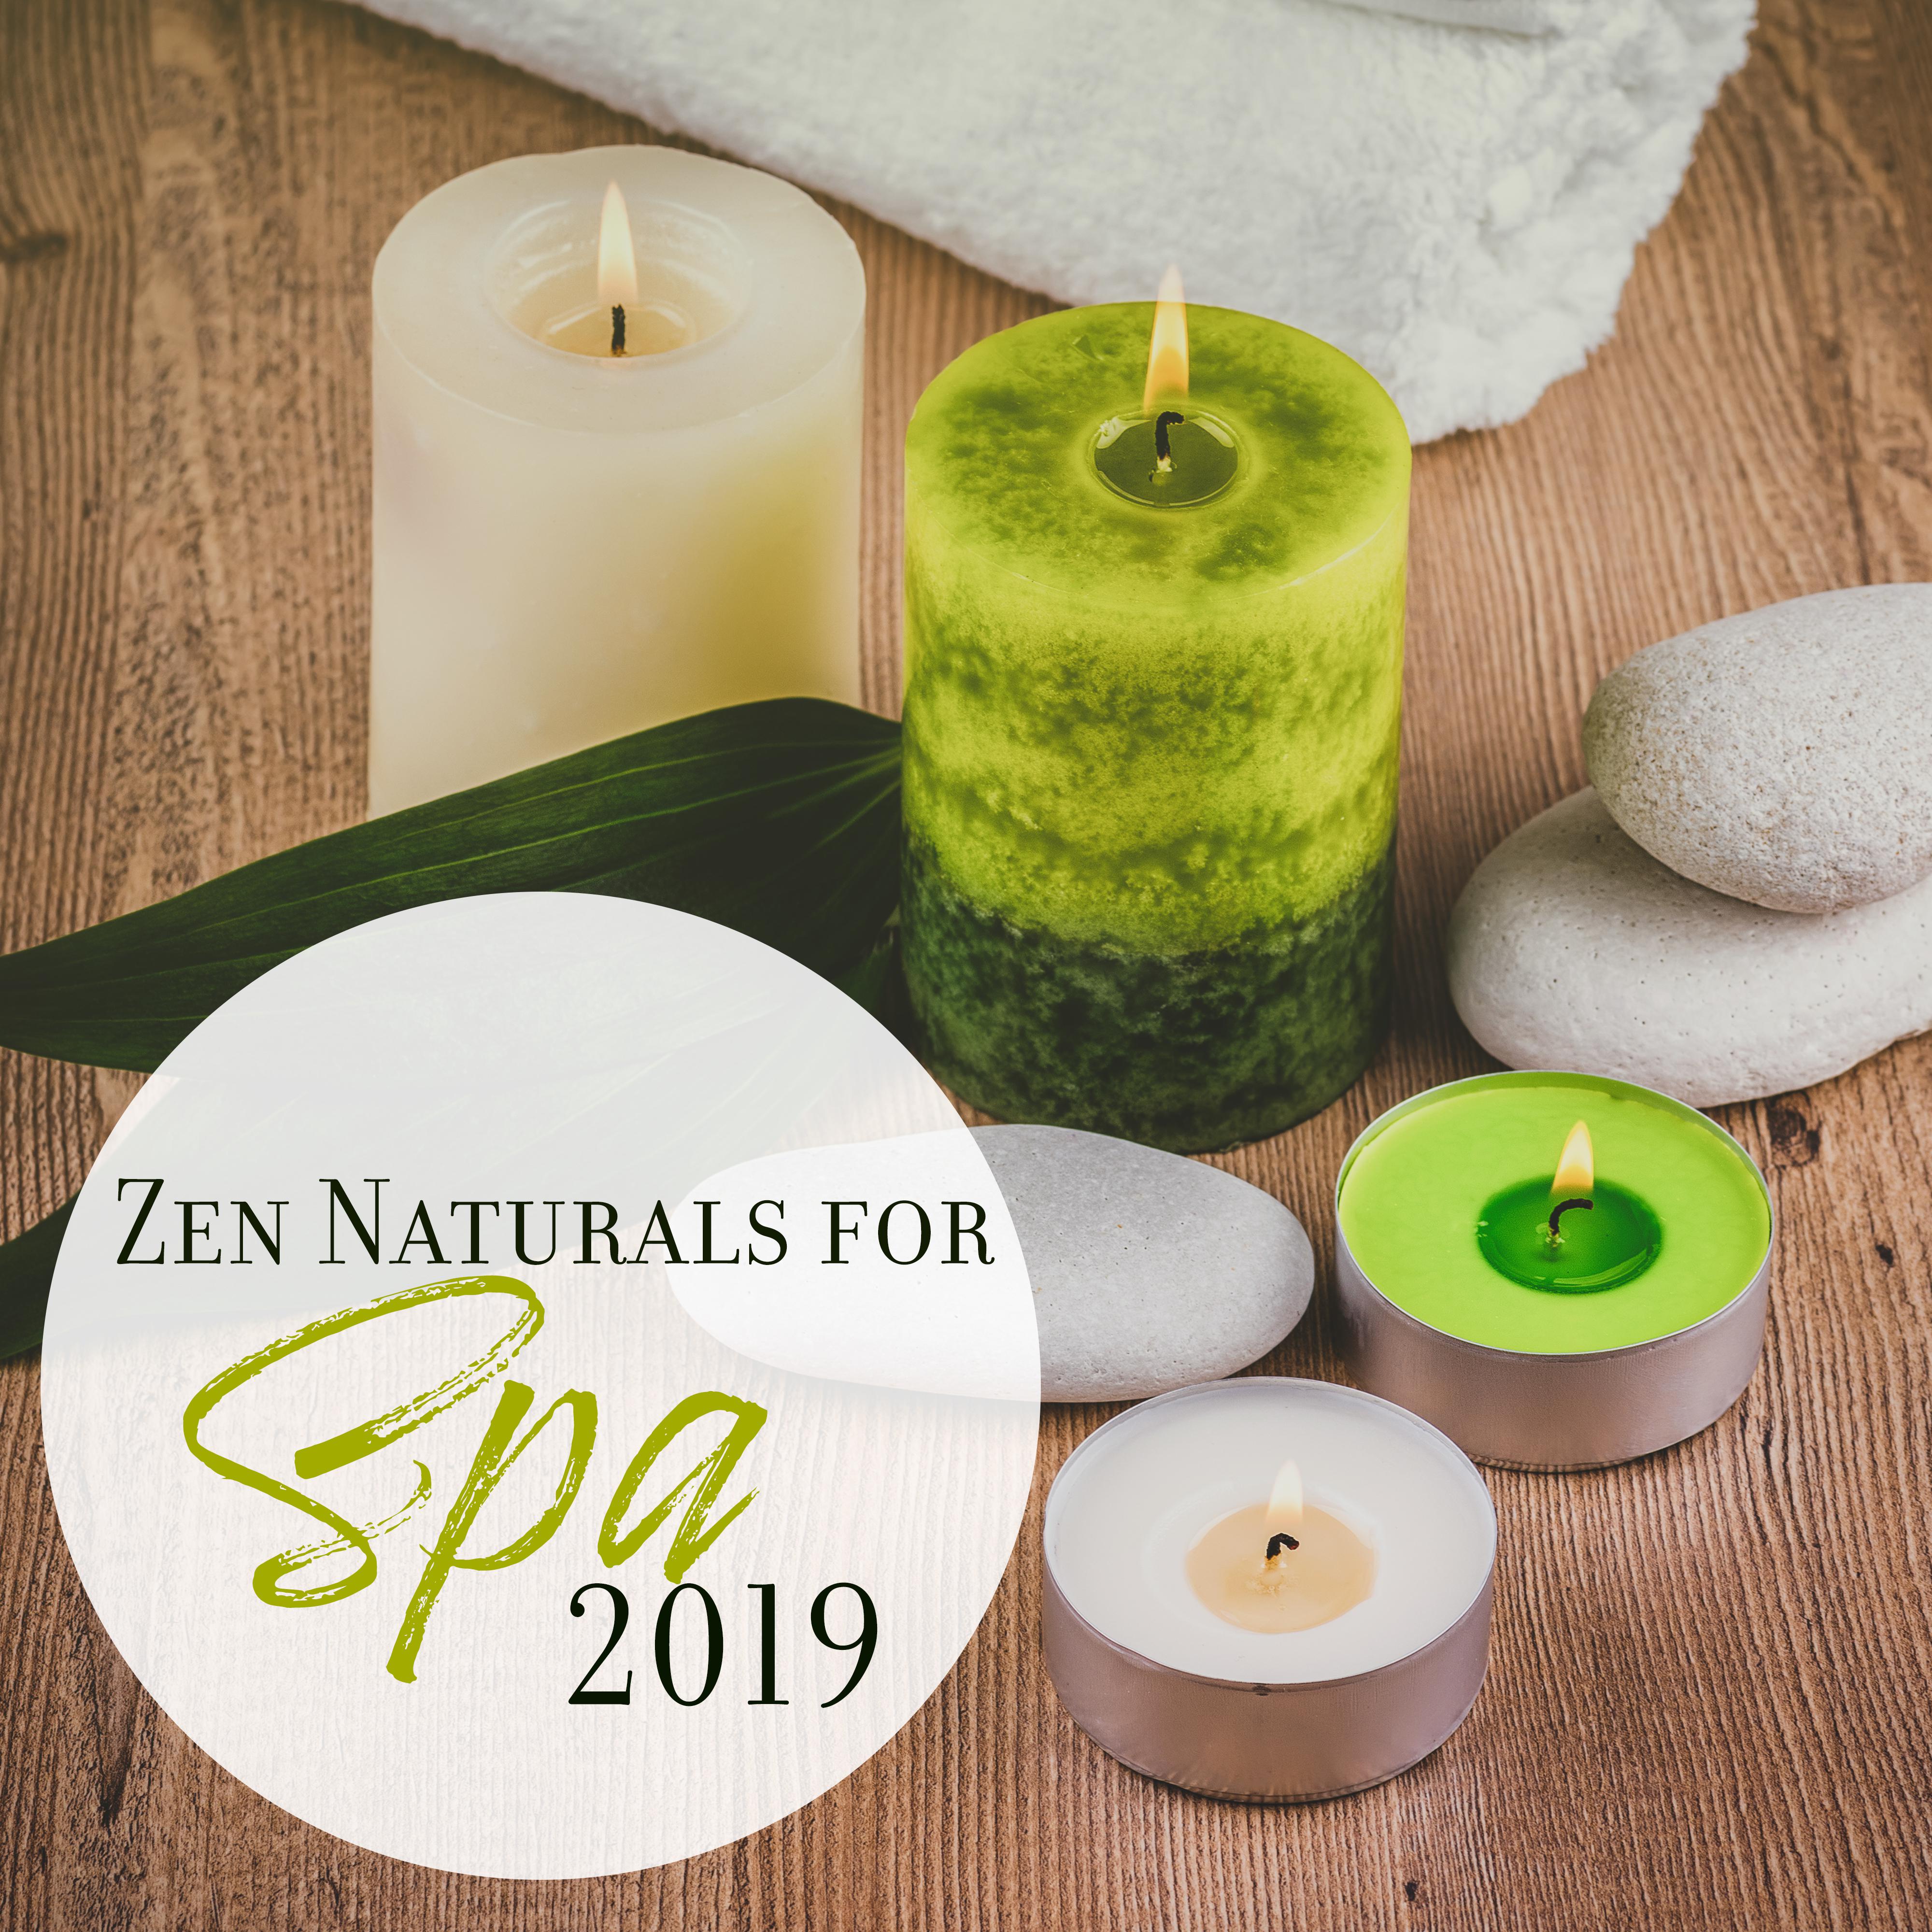 Zen Naturals for Spa 2019 – New Age Relaxing Nature Sounds Music for Wellness, Massage & Sauna